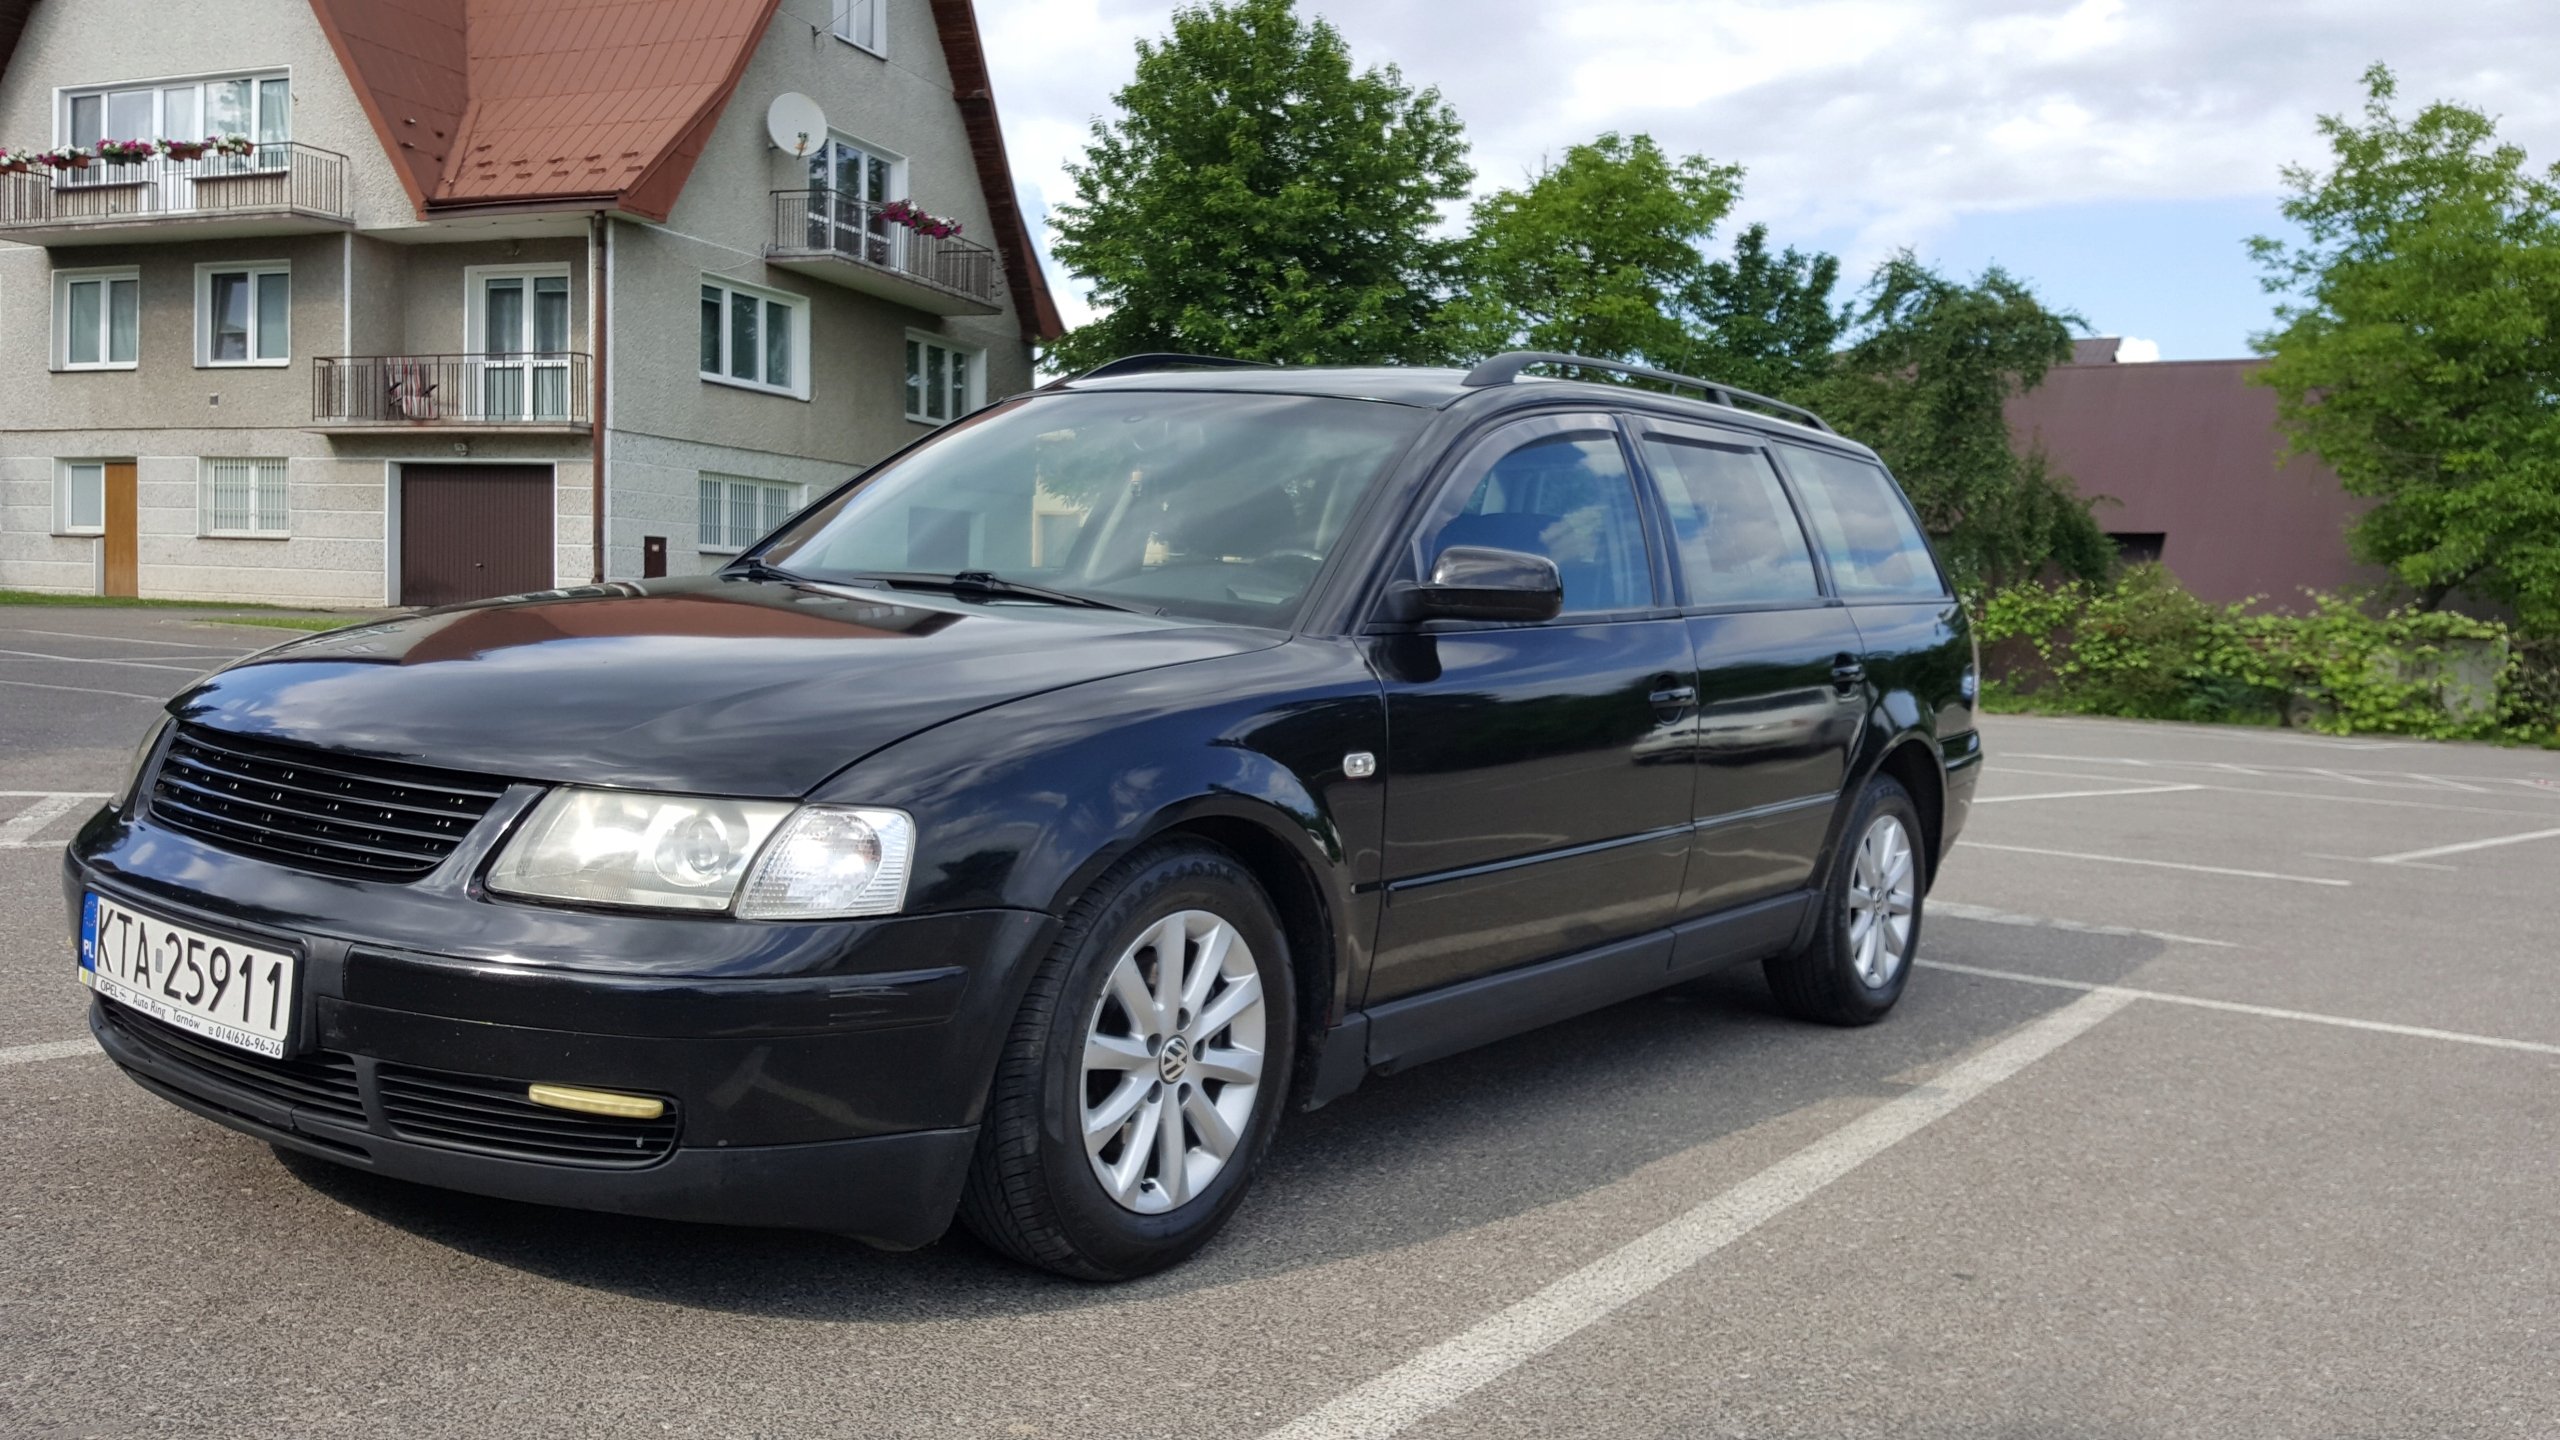 Пассат б5 1999 год. VW Passat b5 2003. Volkswagen Passat b5 1999 универсал. Volkswagen Passat b5 Black. Фольксваген b5 Пассат 1999.